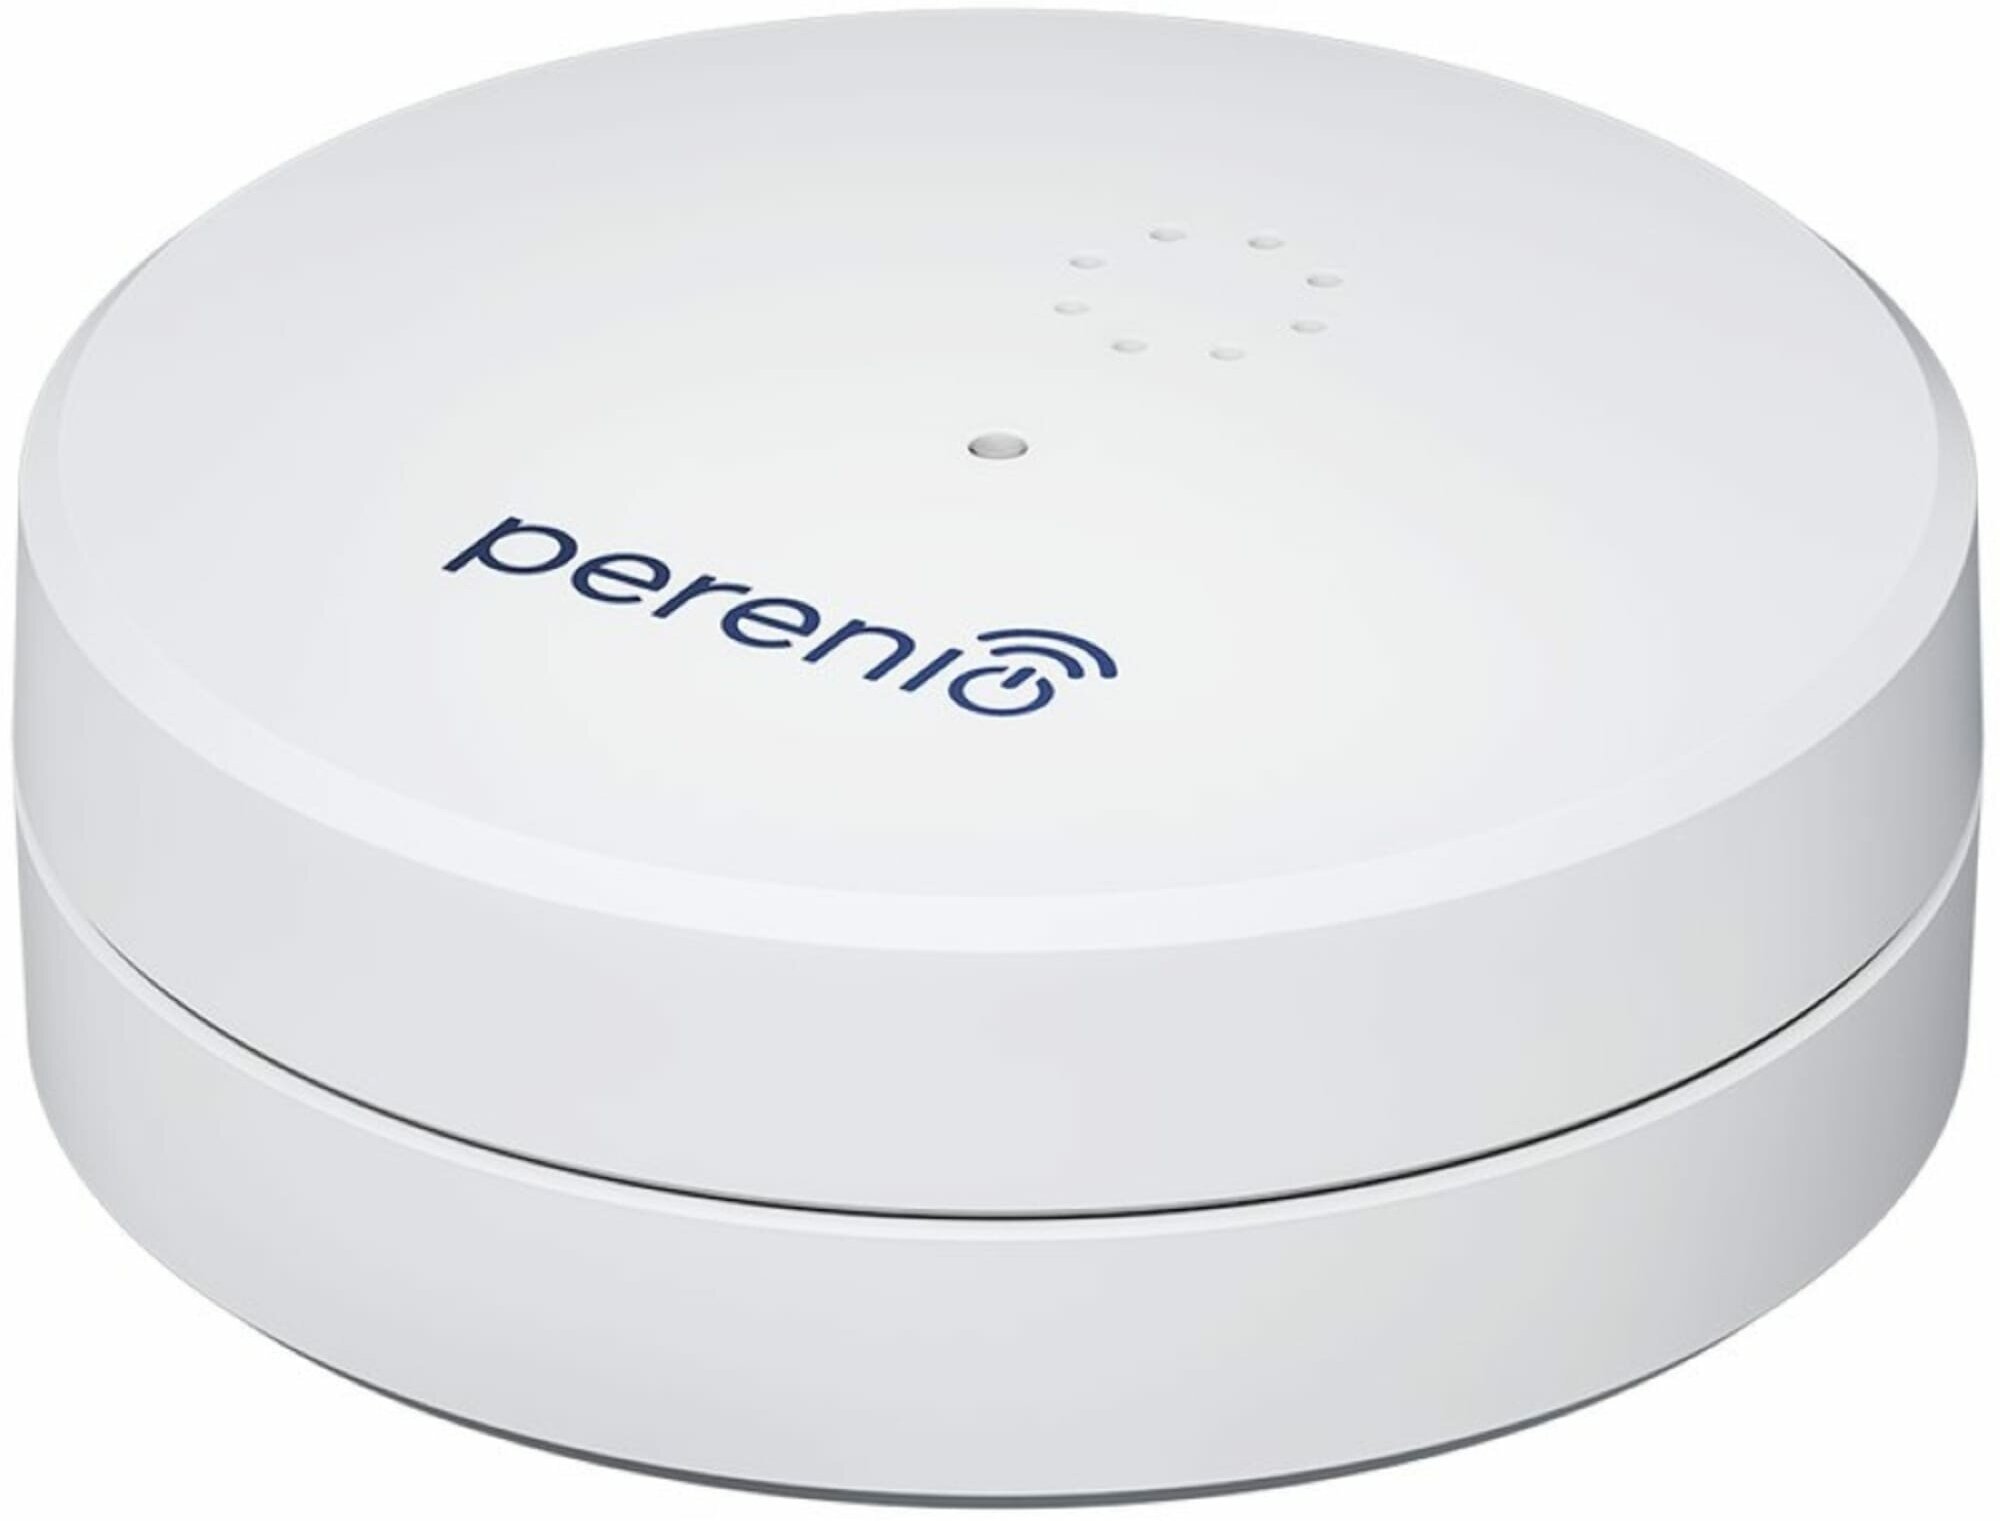 Беспроводной датчик протечки Perenio PECLS01